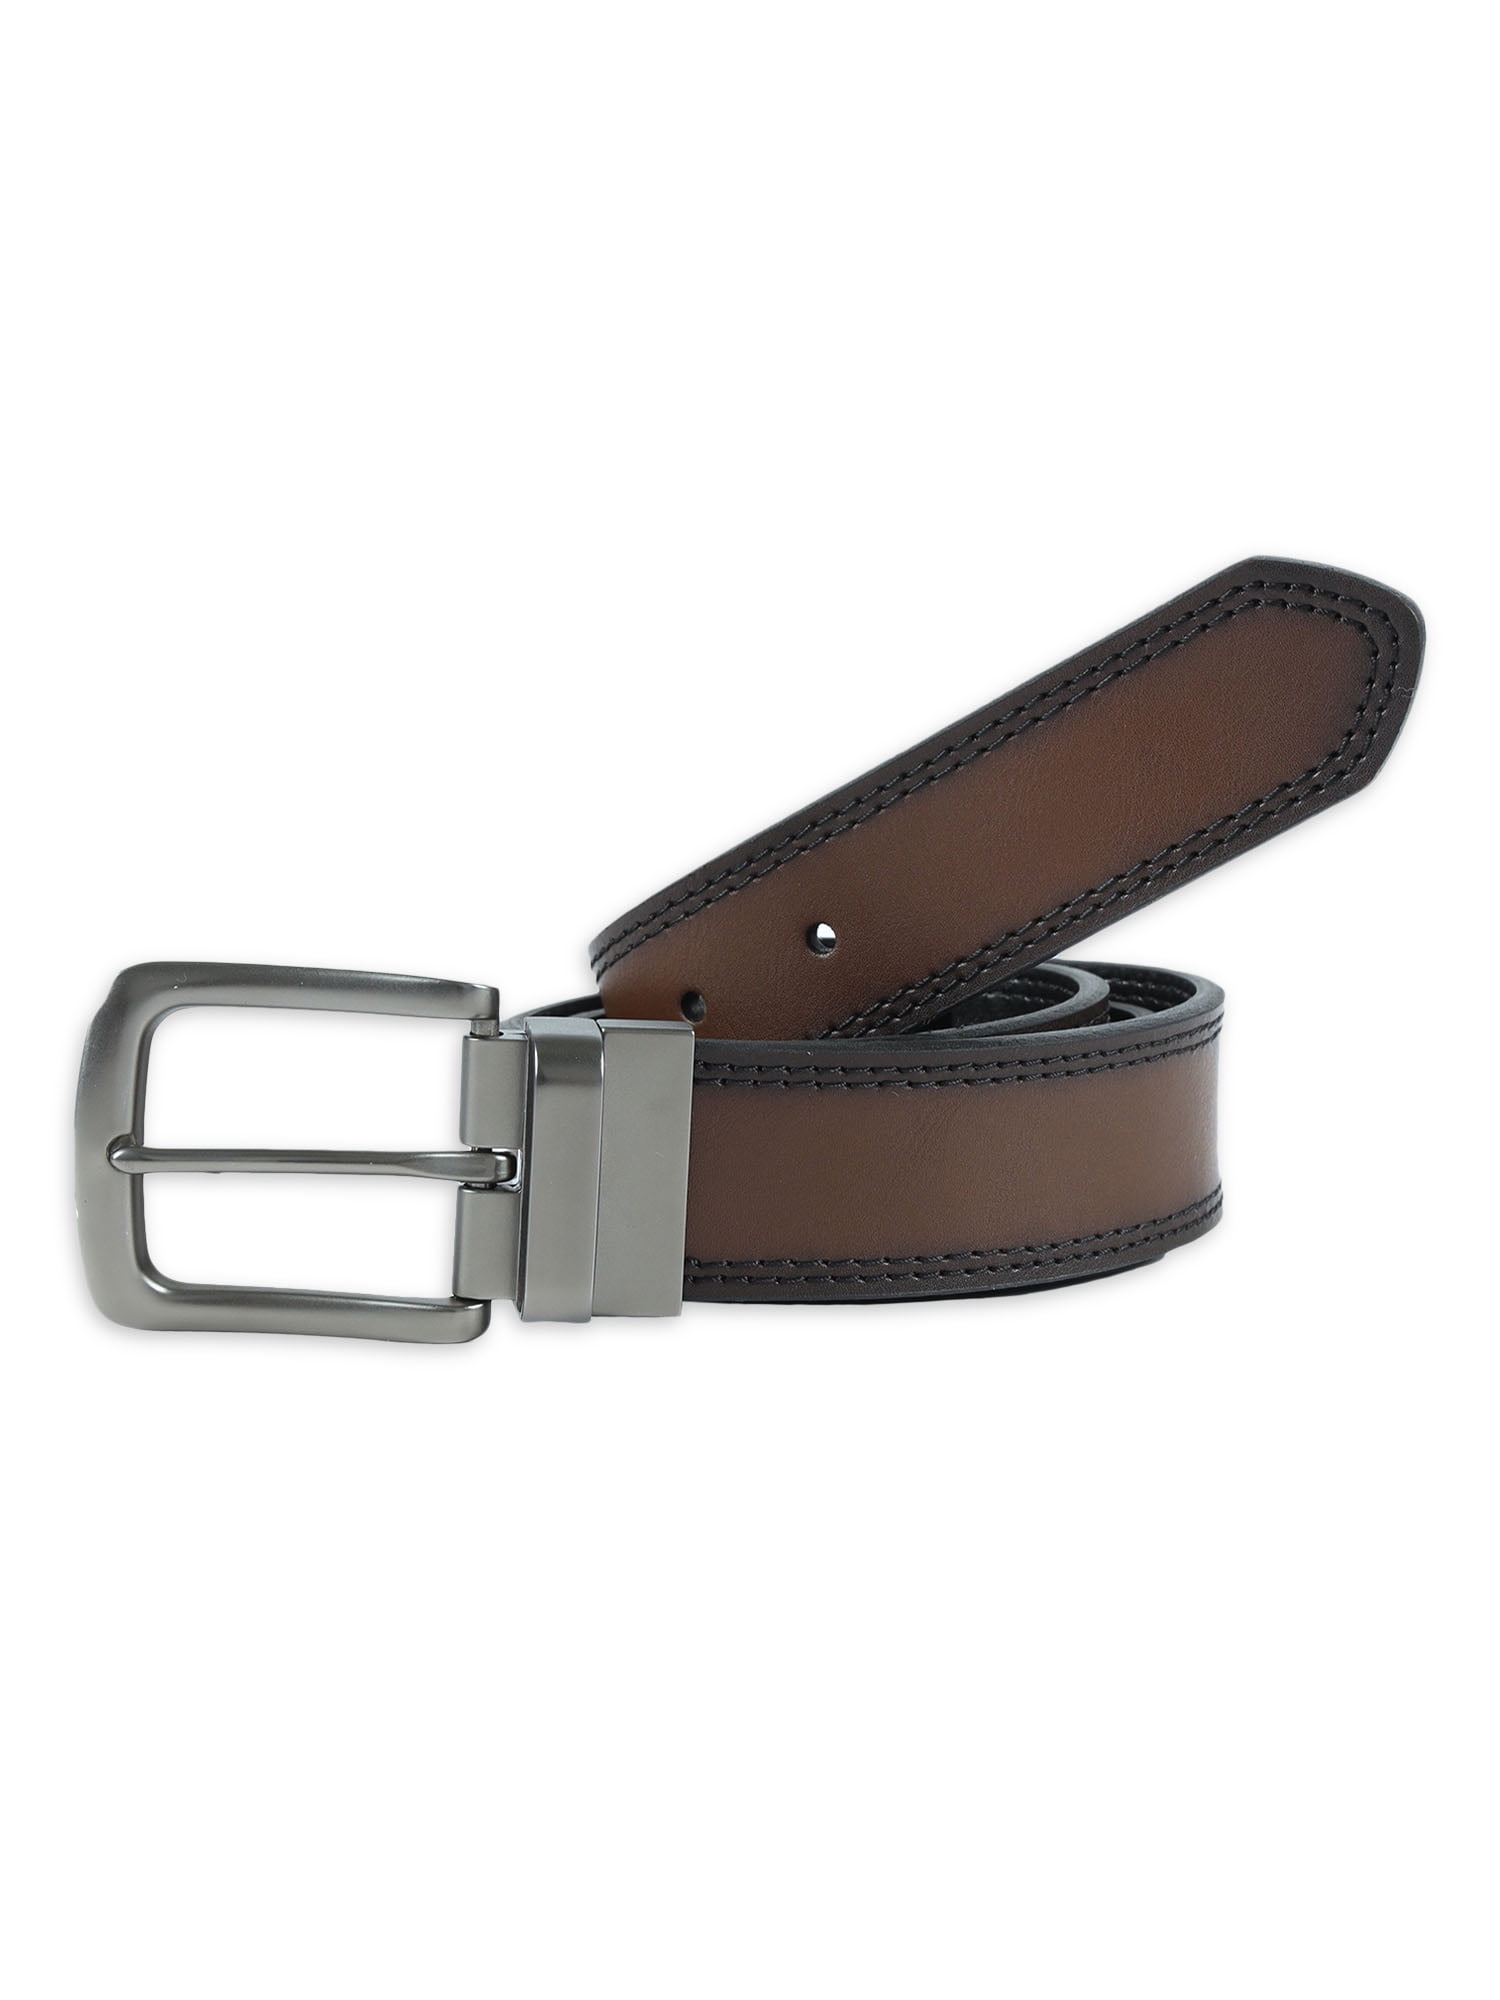 Mens Belt Reversible Leather Dress Belts Casual Jean Belt Removable Buckle 